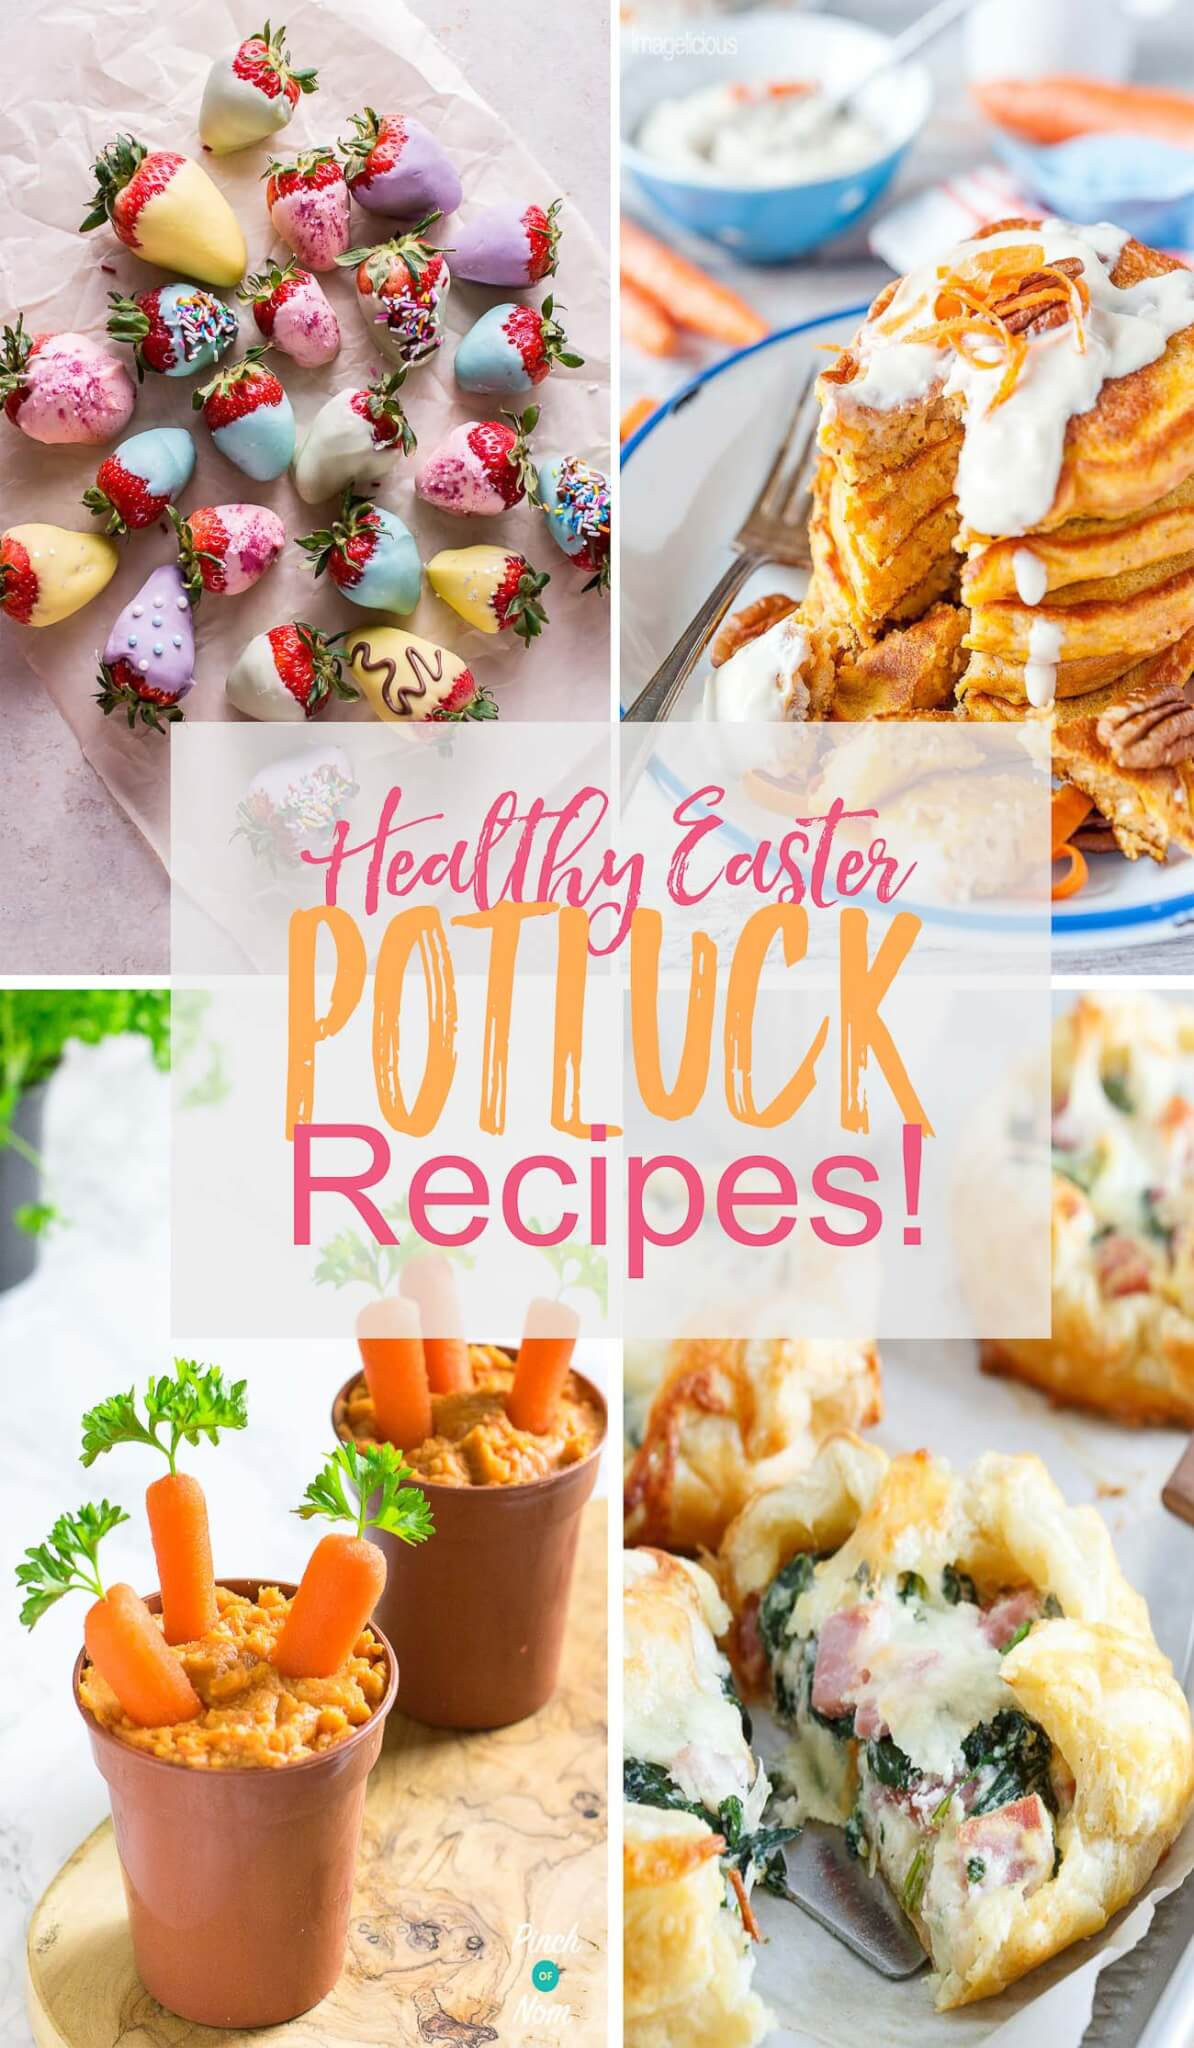 Easter Brunch Desserts
 12 Healthy Easter Brunch Potluck Recipes The Girl on Bloor